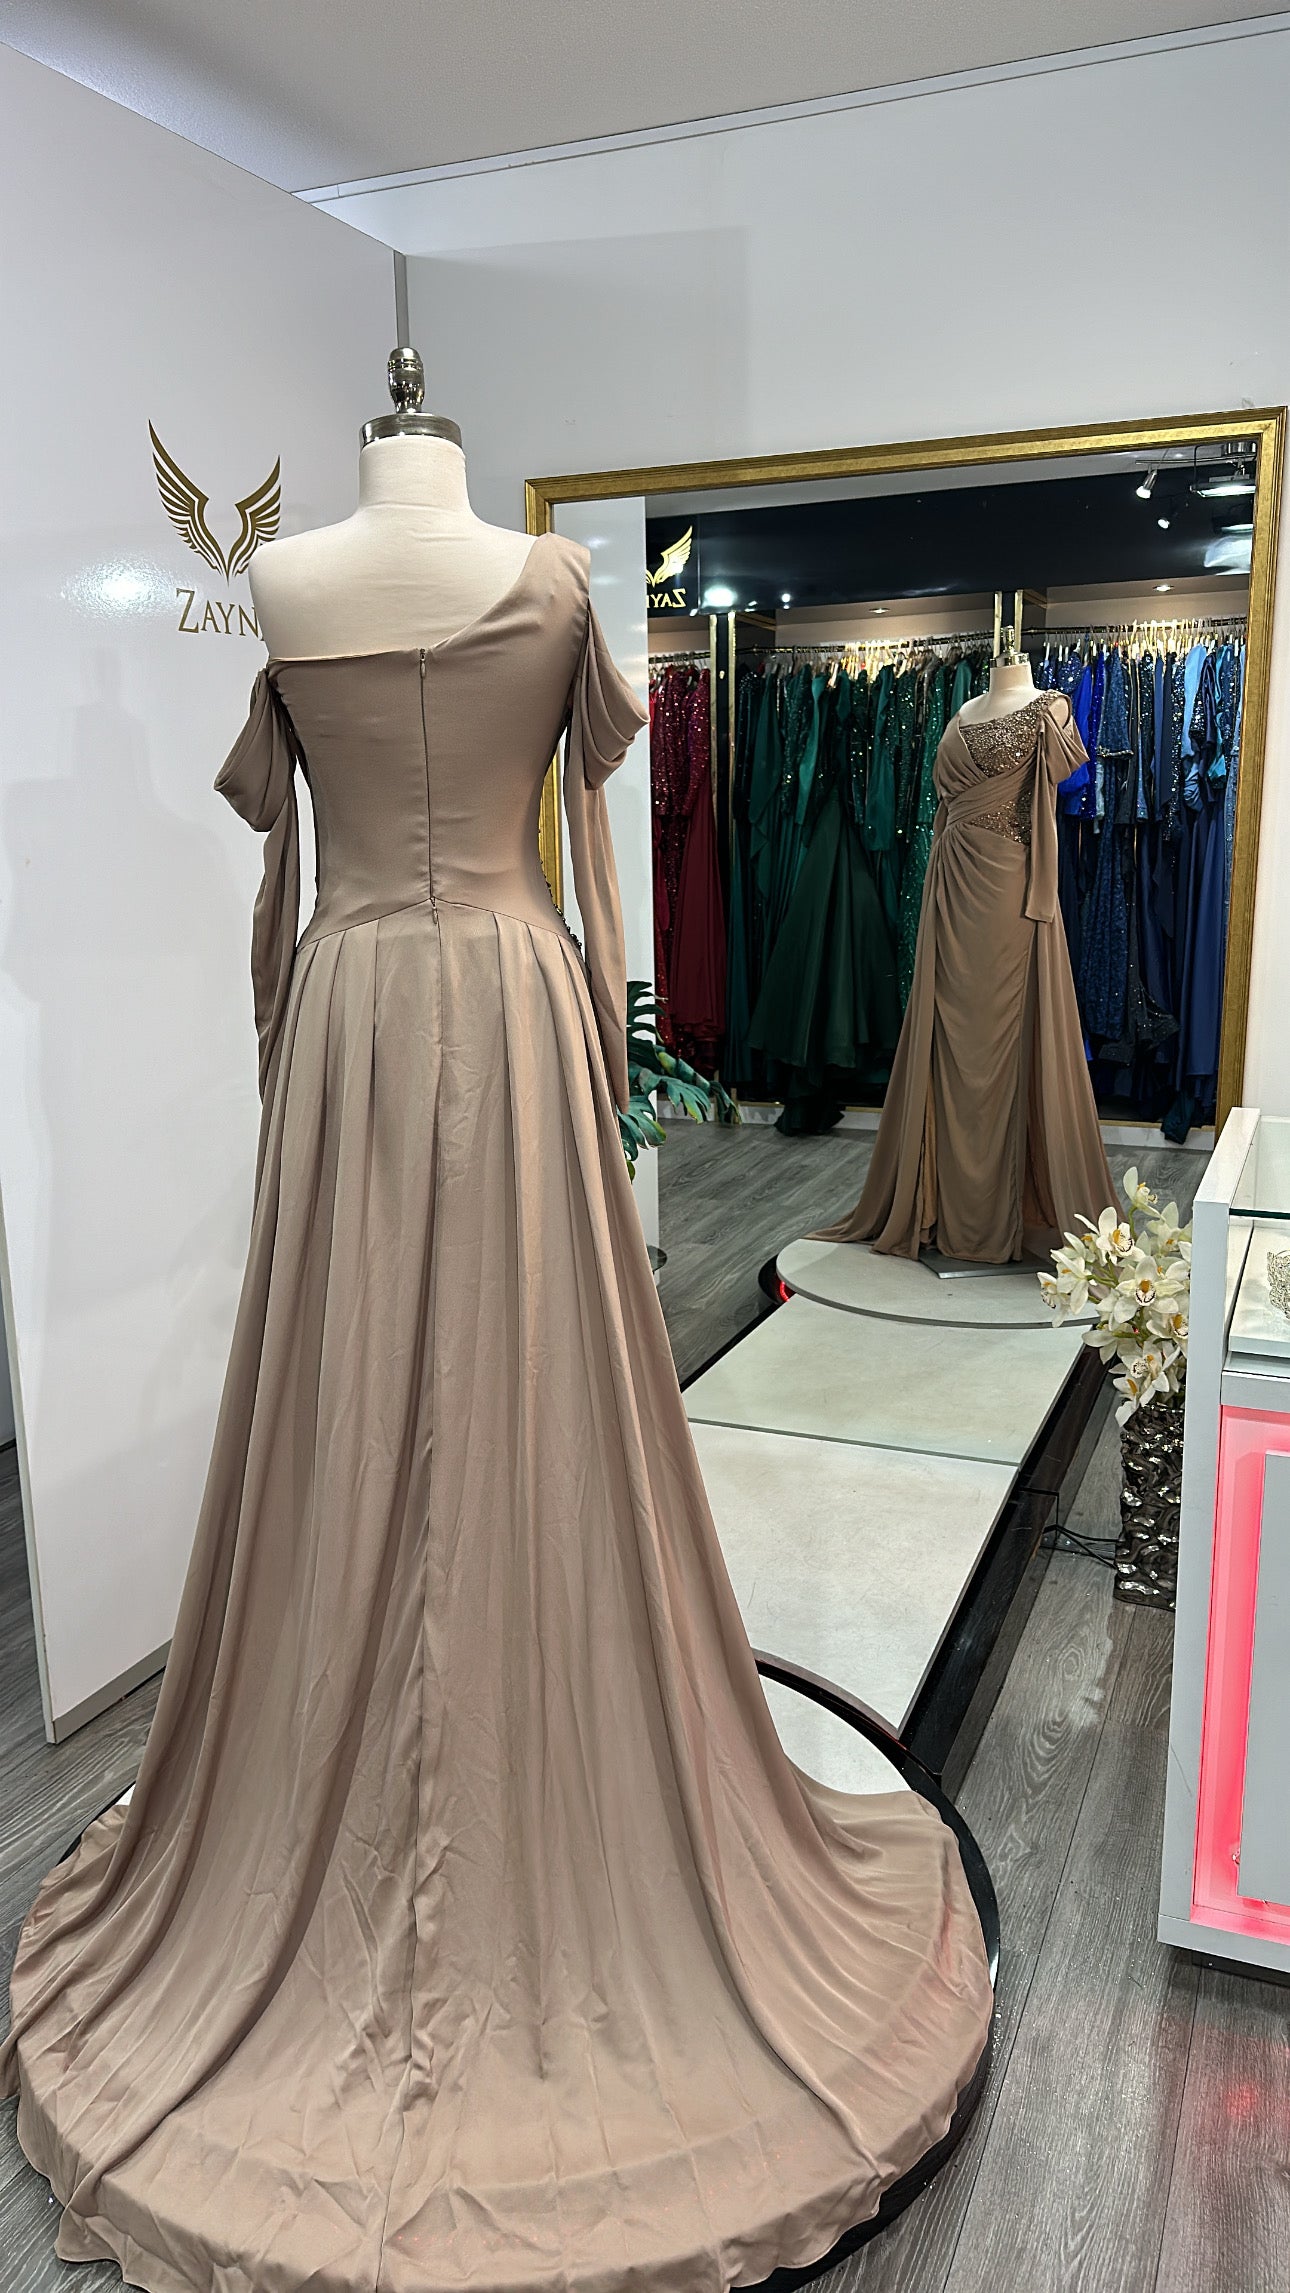 The Lina dress